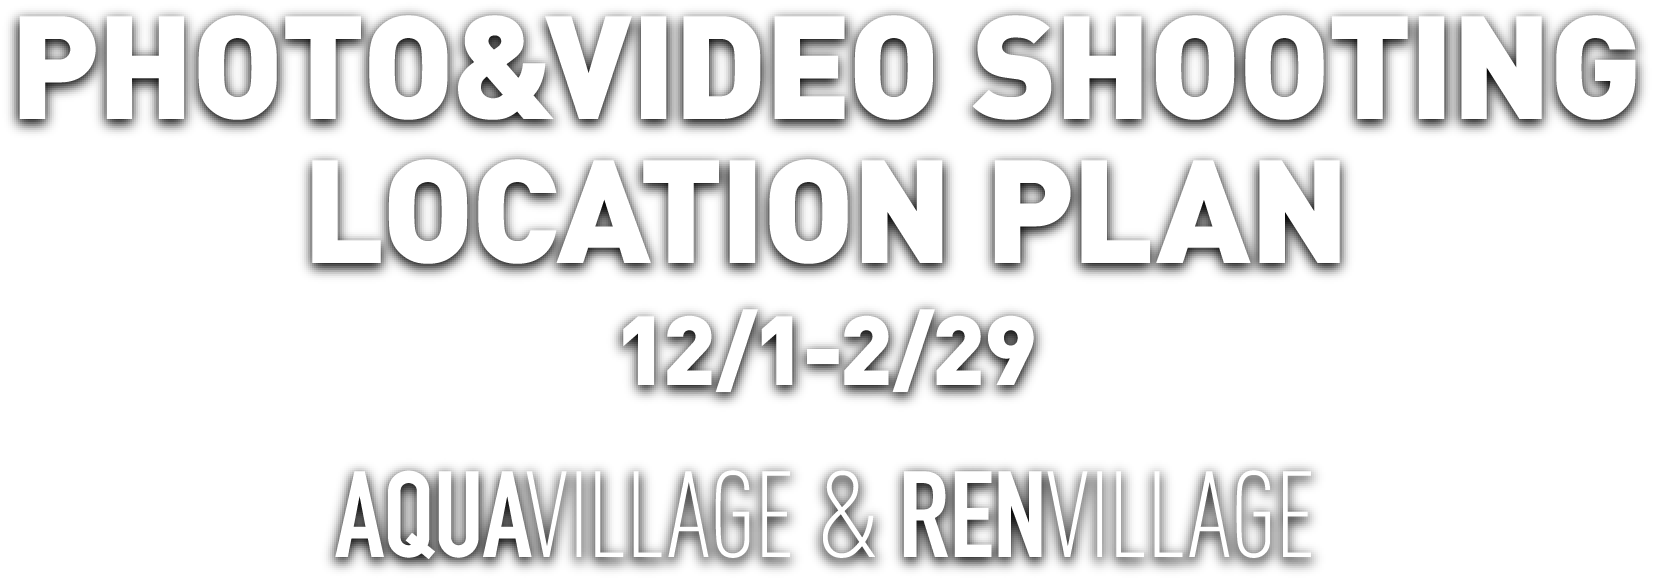 PHOTO&VIDEO SHOOTING LOCATION PLAN 12/1-2/29 AQUAVILLAGE & RENVILLAGE